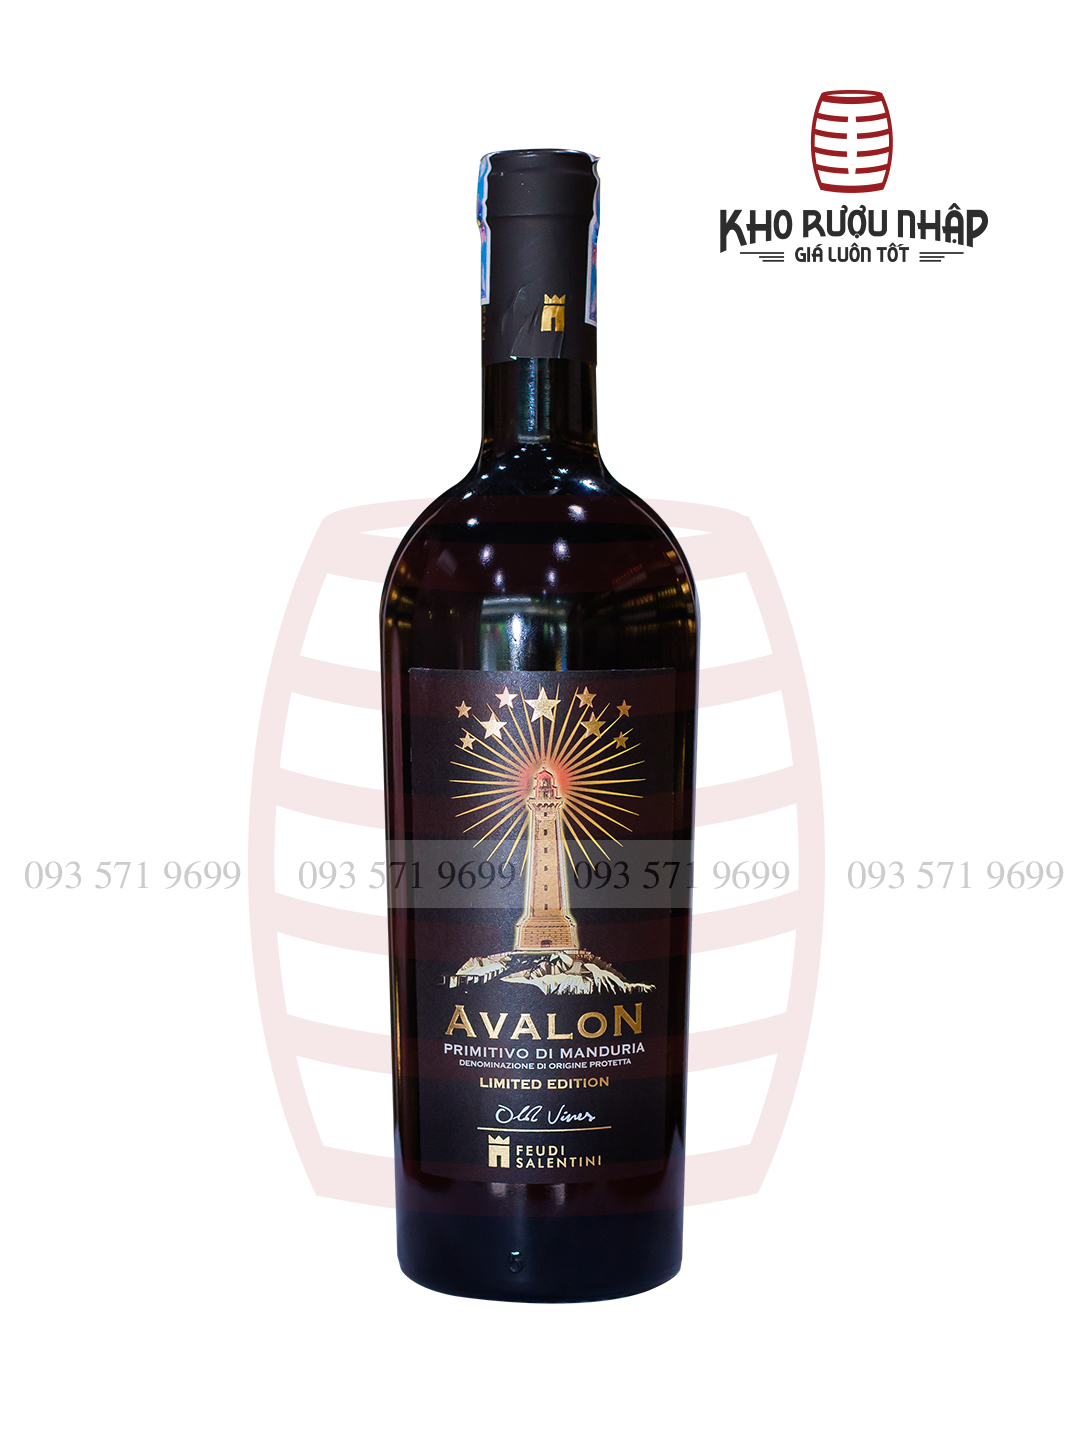 Rượu vang Avalon Primitivo Di Manduria cao cấp – BW – 2000